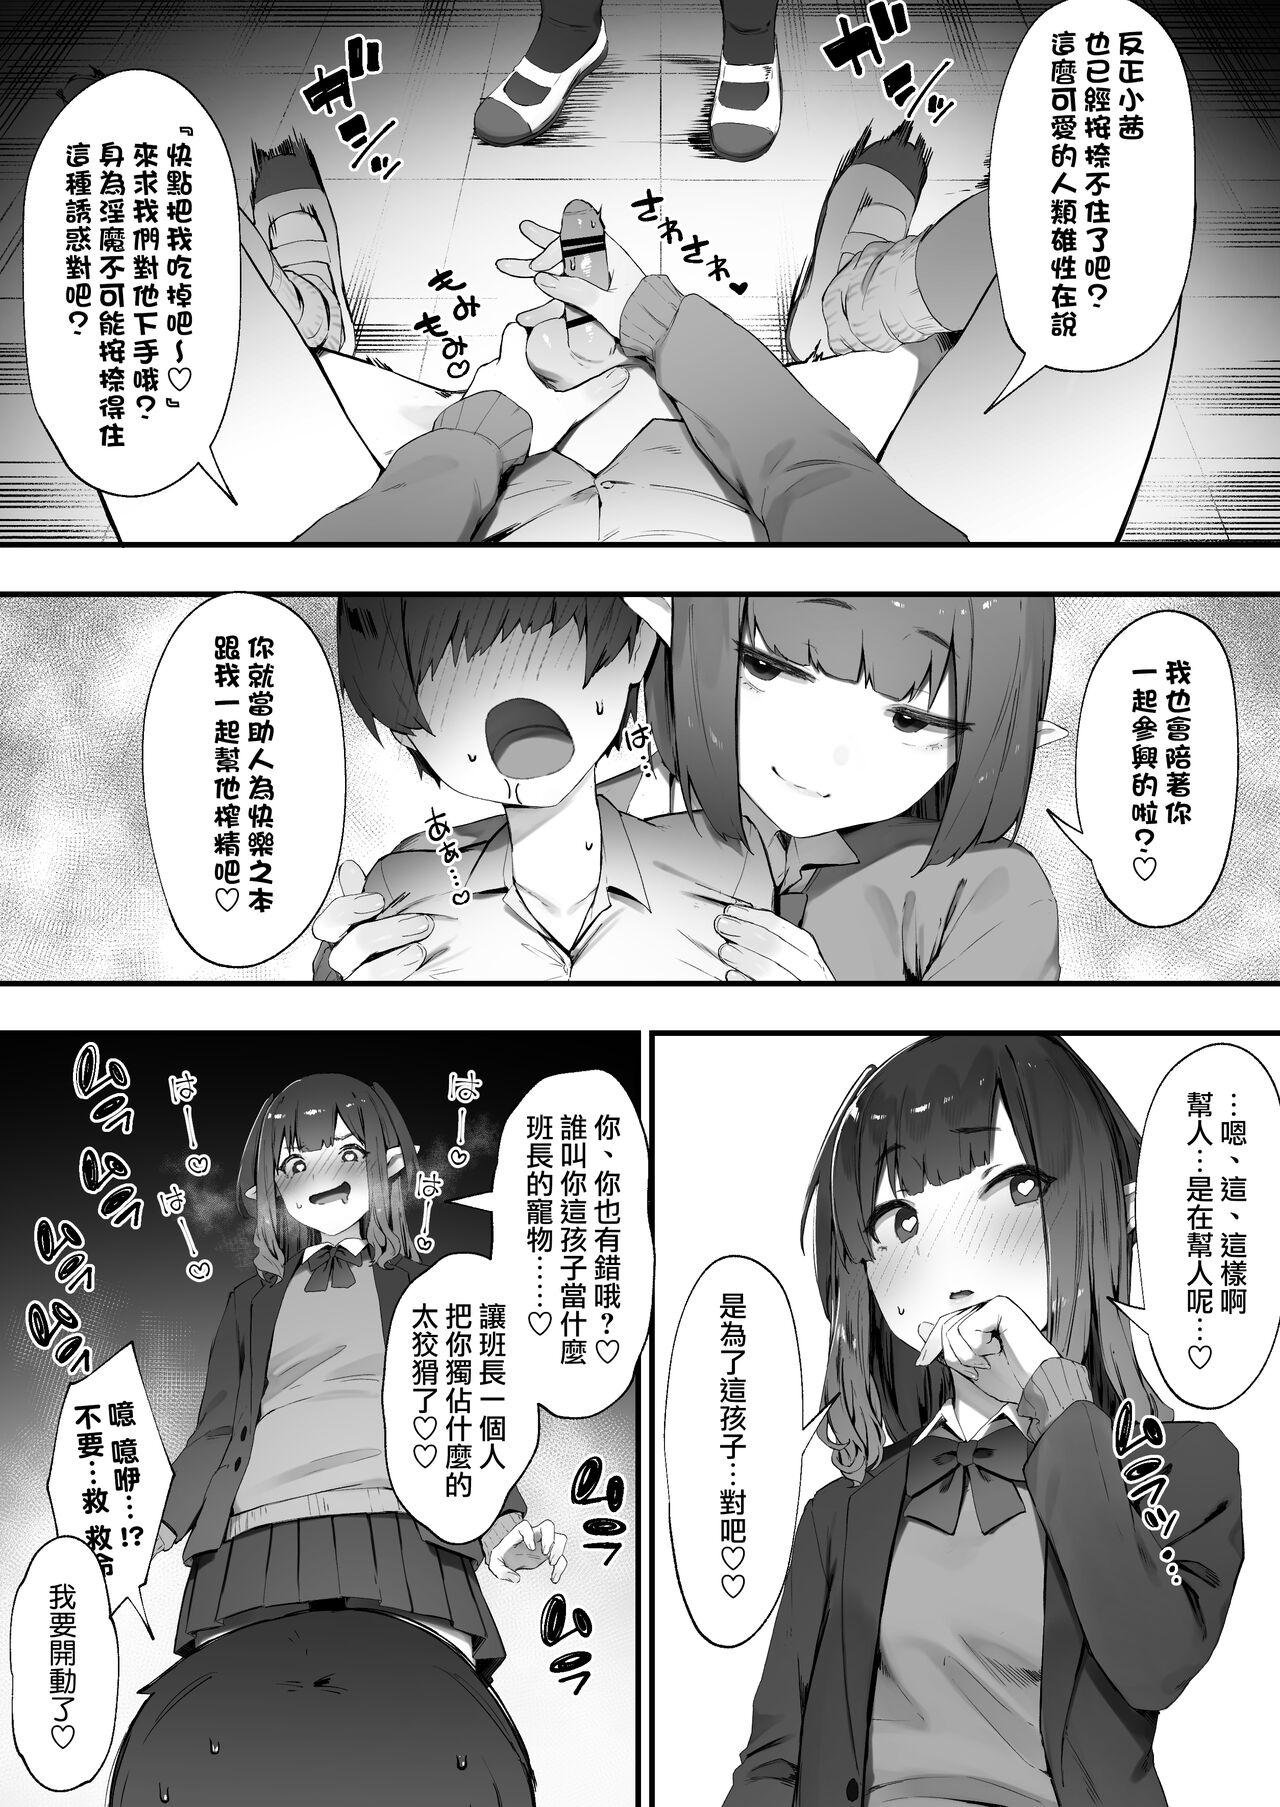 Metendo Inma no tsumami gui | 淫魔愛偷吃 - Original Ex Girlfriend - Page 4